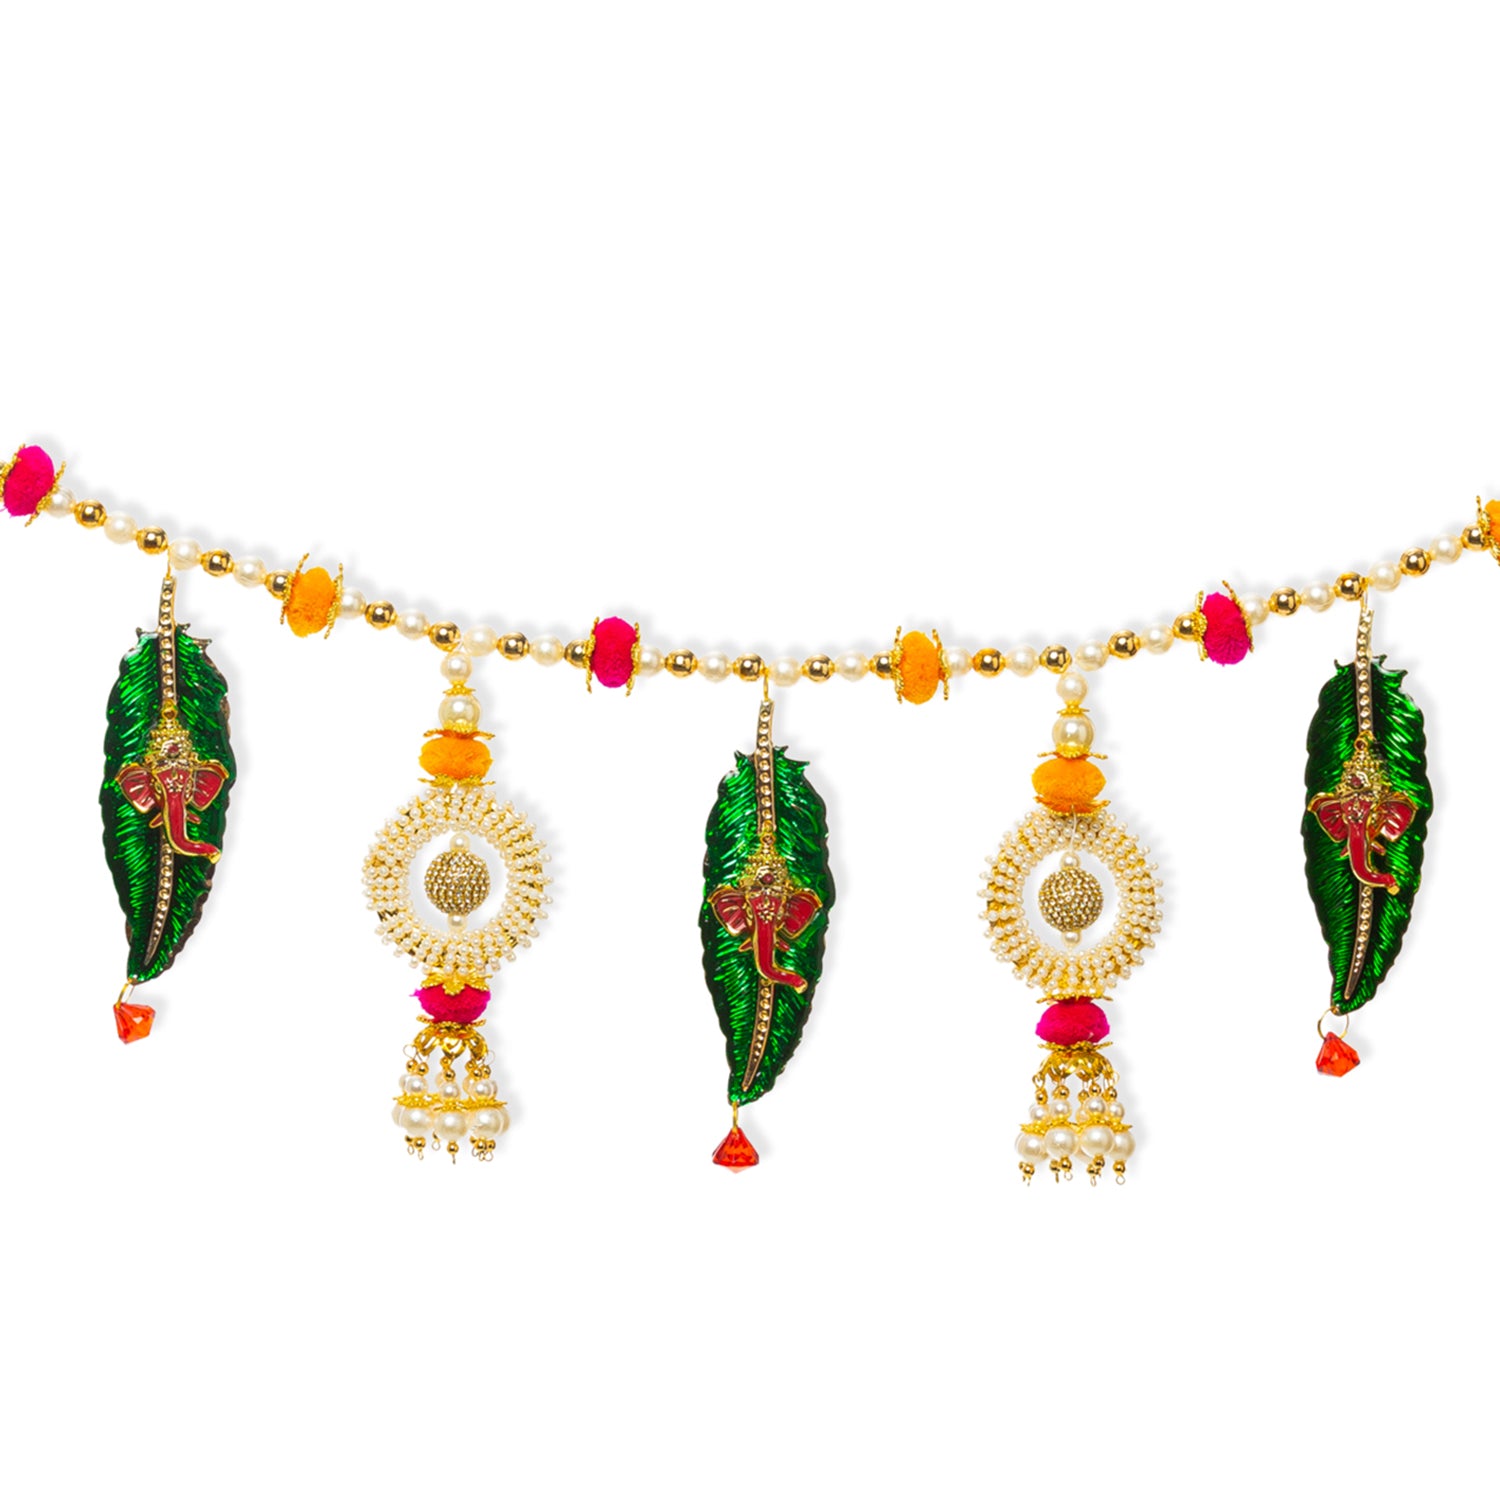 Digital Dress Room Toran For Door Hangings Diwali Decoration Fancy Golden Ganesh ji Leaf Pearl with Pom Pom Balls